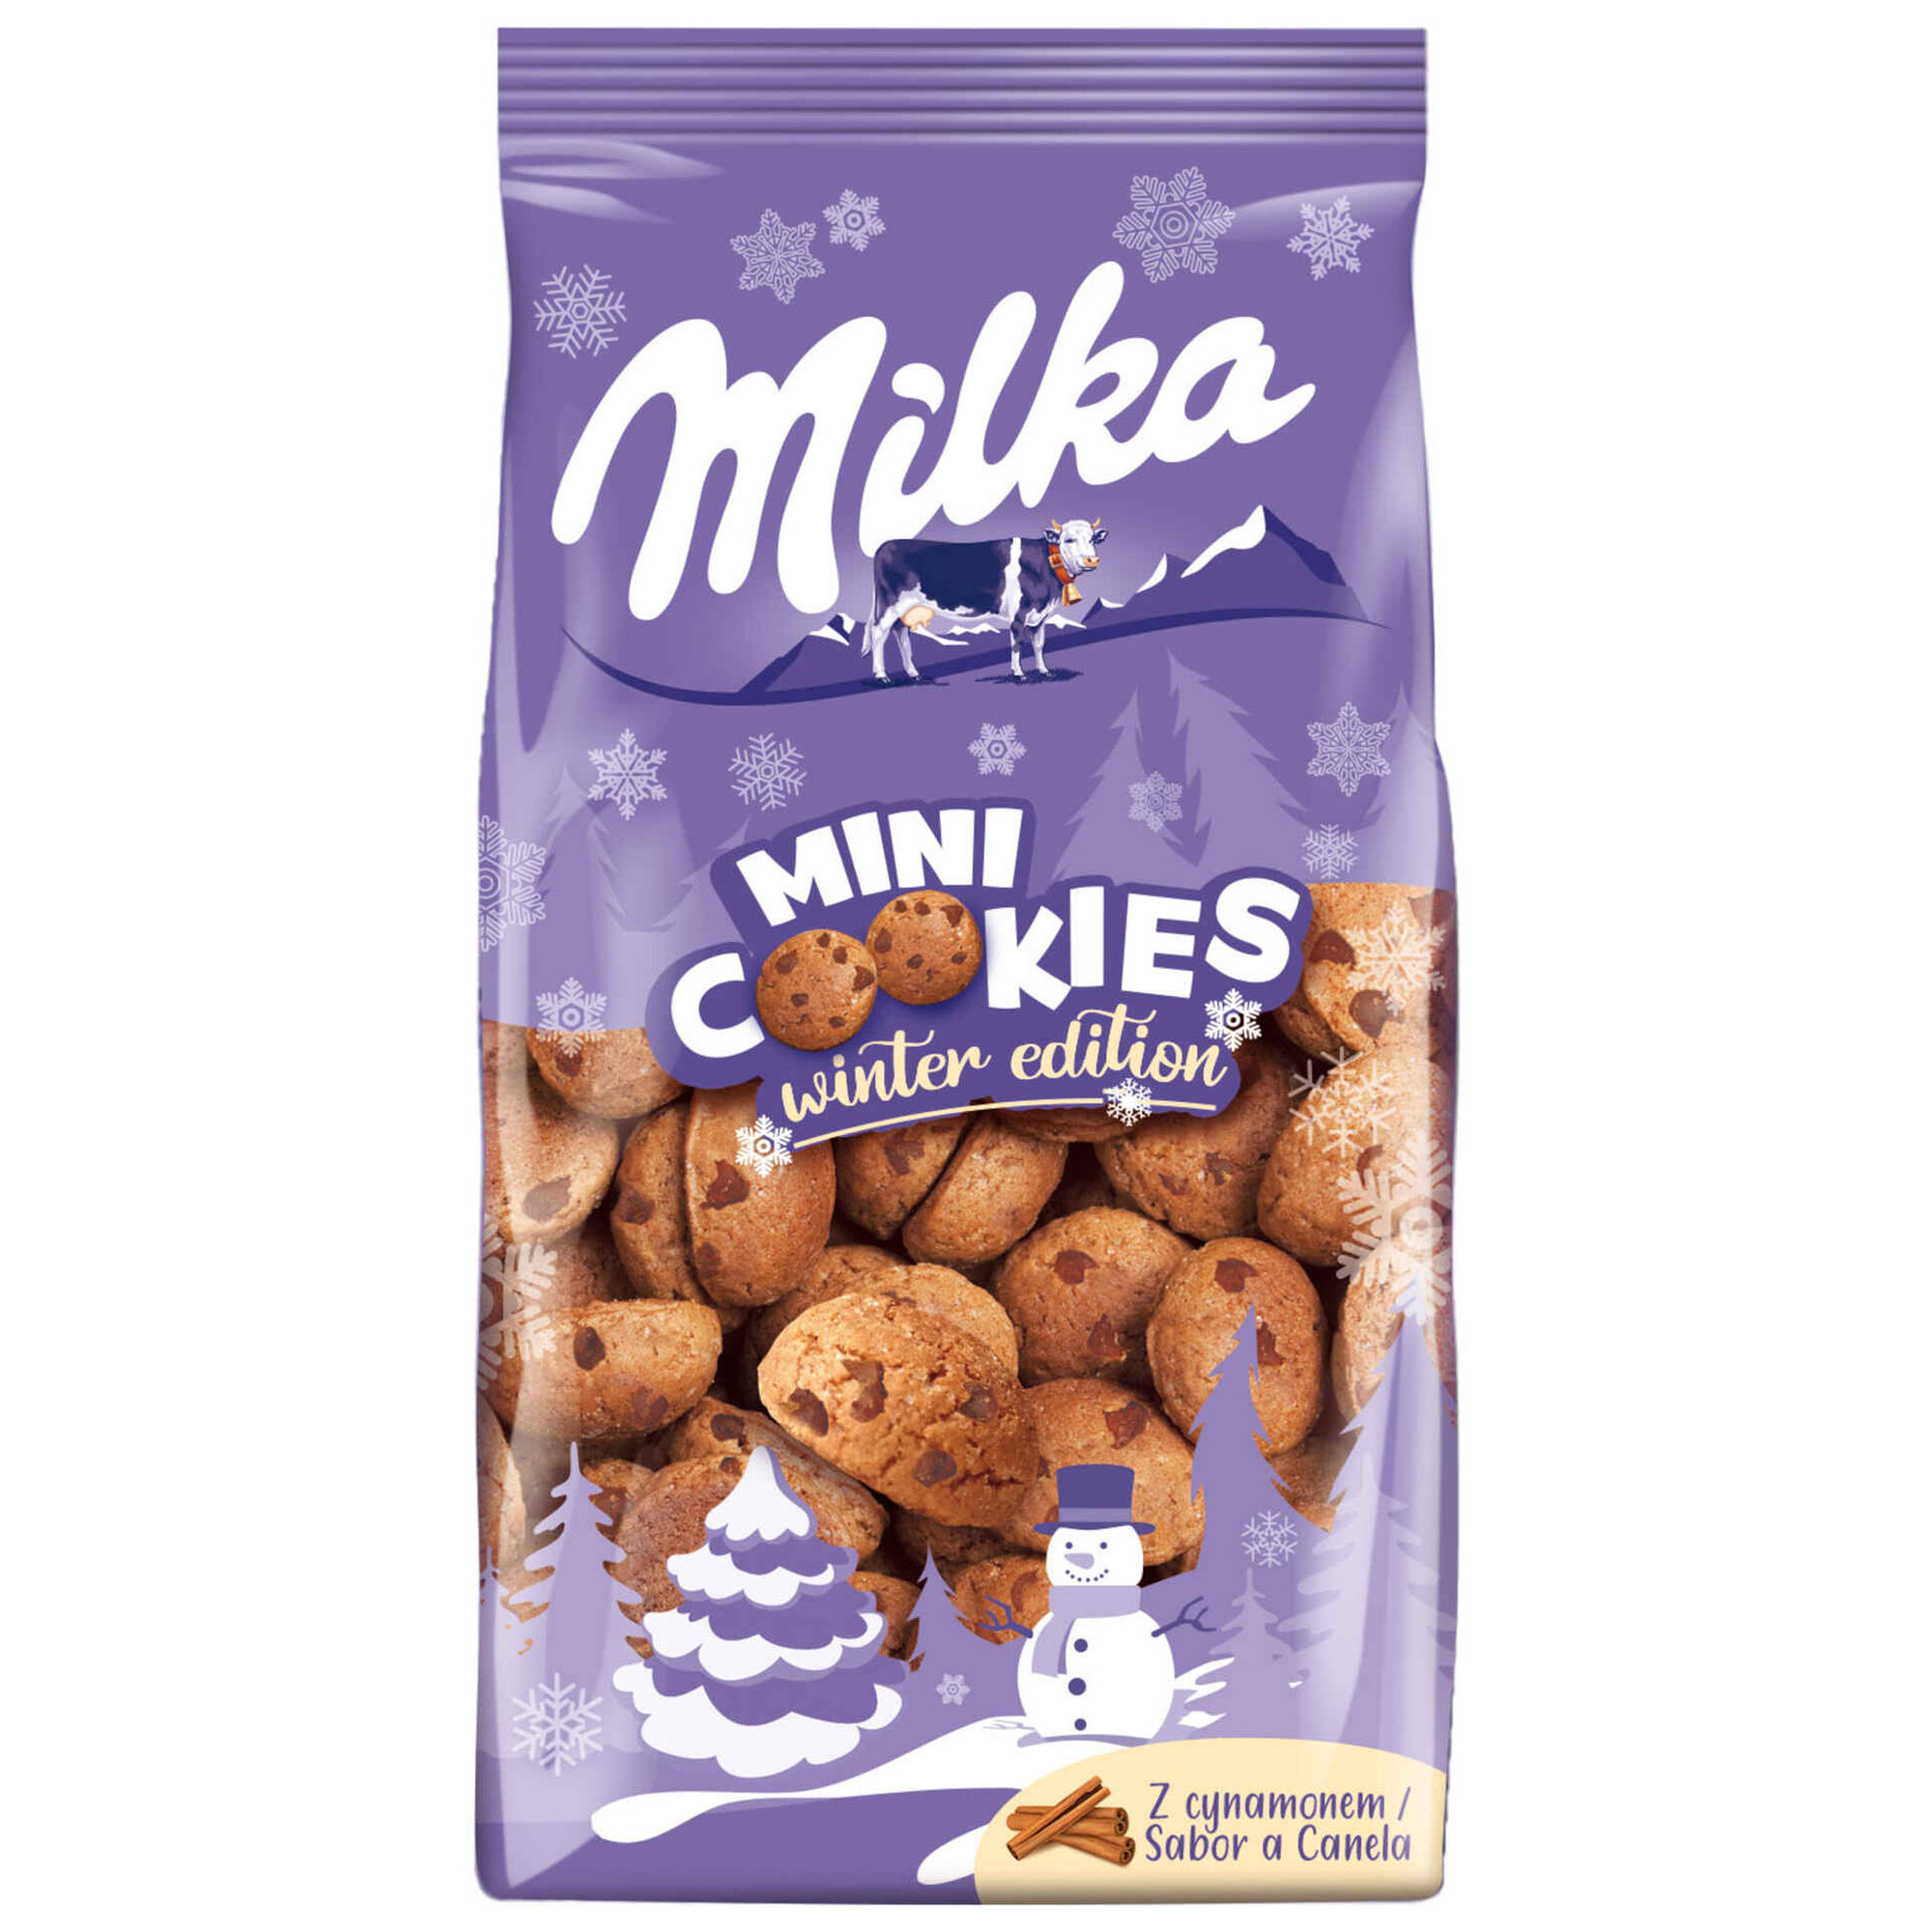 Cookies Mini Canela Winter Edition